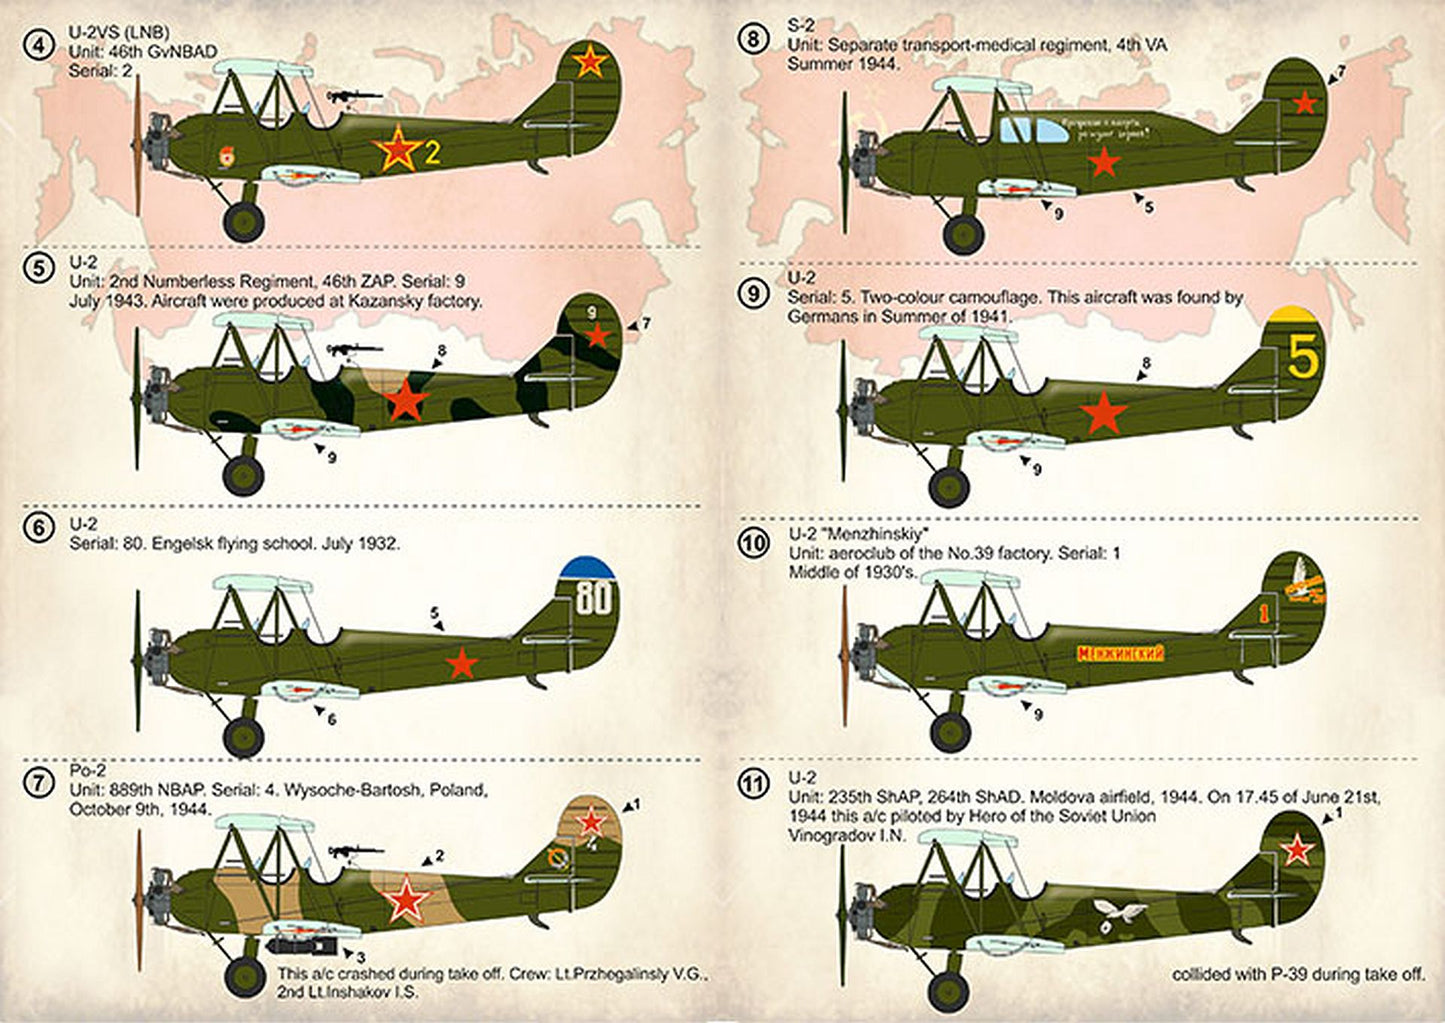 Print Scale 48-177 1/48 Polikarpov U-2/Po-2 Part 2 Decals